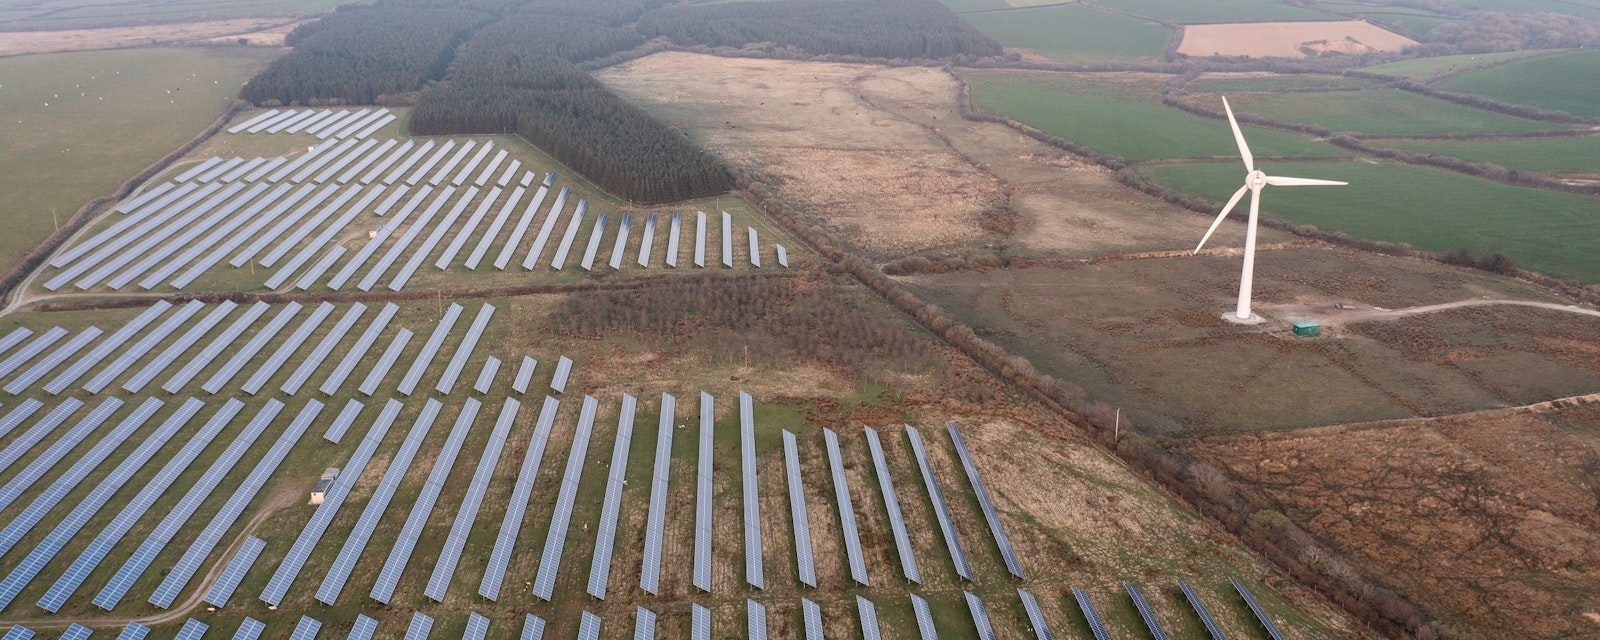 Aerial,Views,Of,A,Solar,Farm,In,Sw,England,,Uk